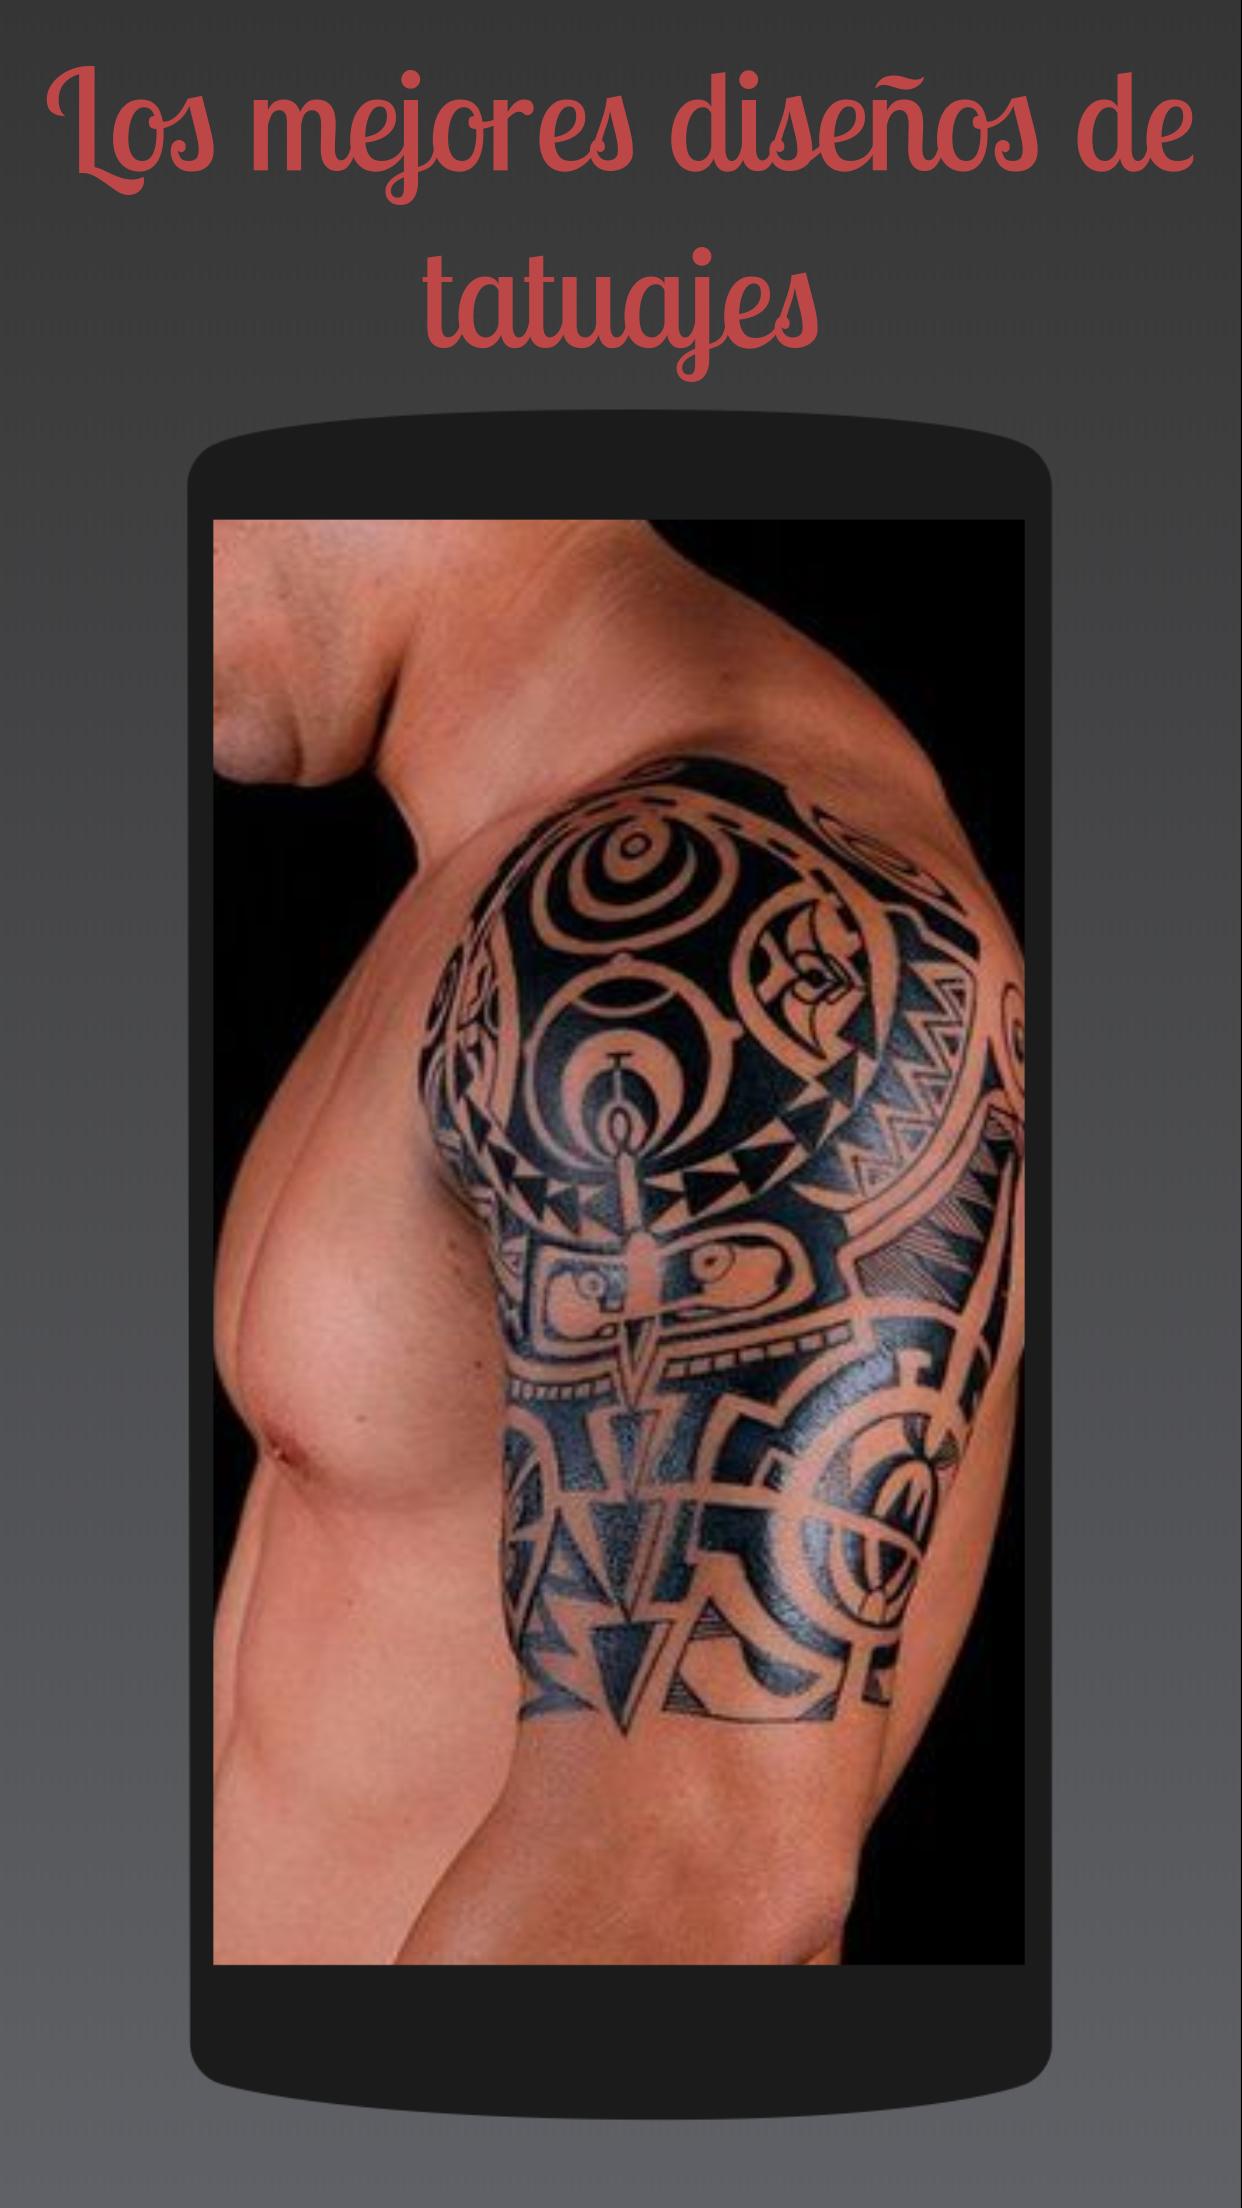 1000 ideas de tatuajes: Tatto Gallery 1.1 Screenshot 2